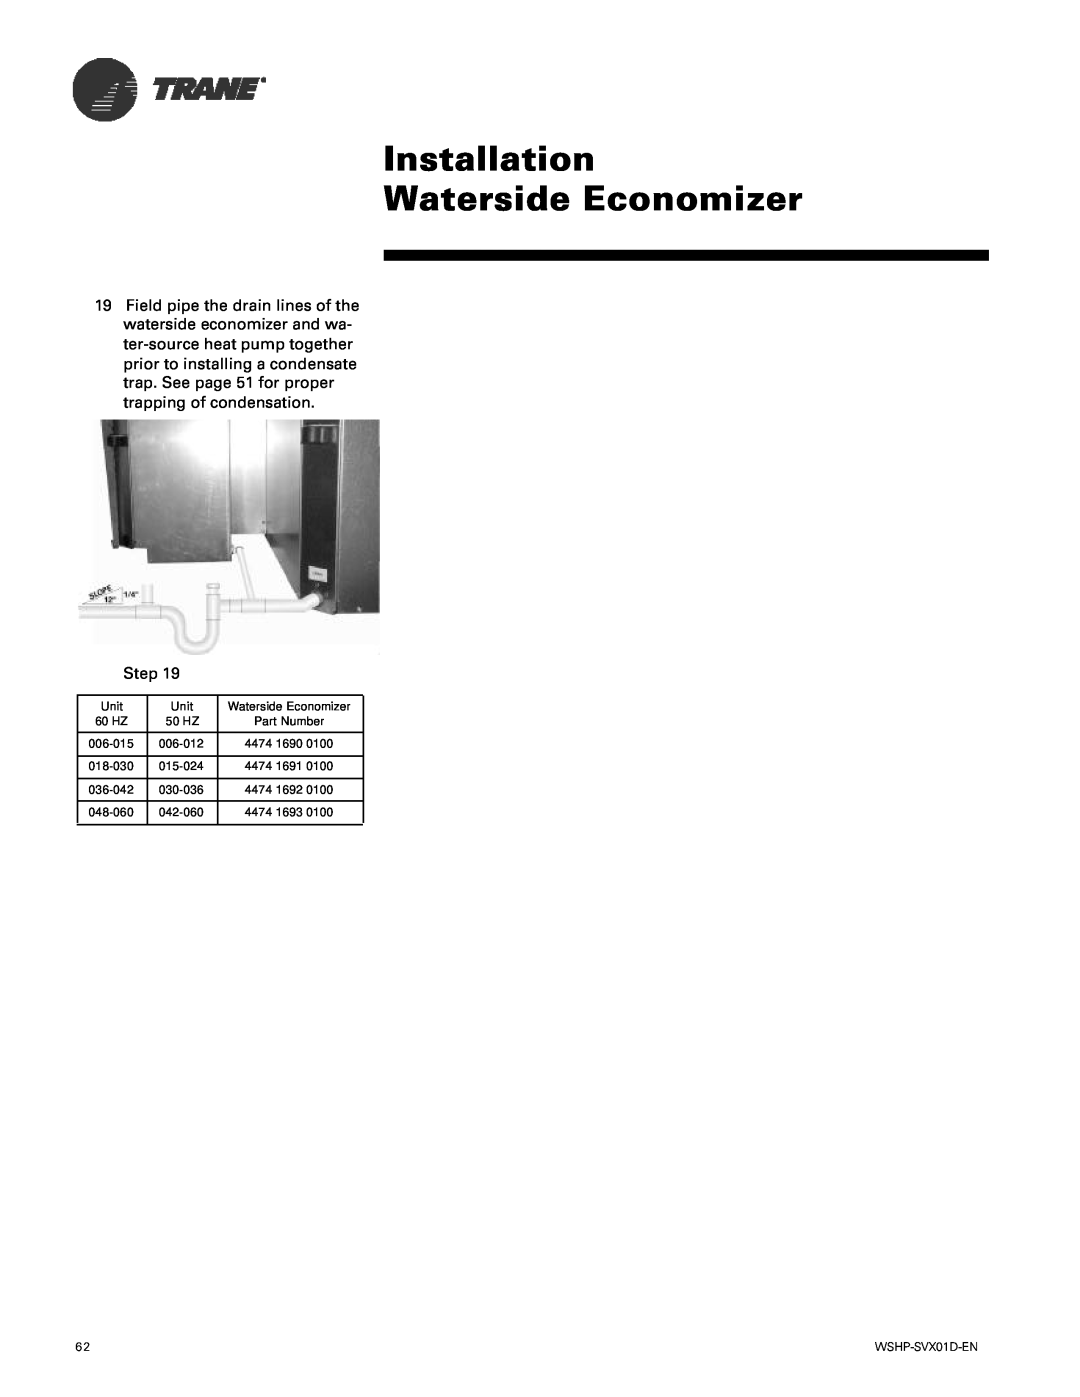 Trane GEH, GEV manual Installation Waterside Economizer, Step 